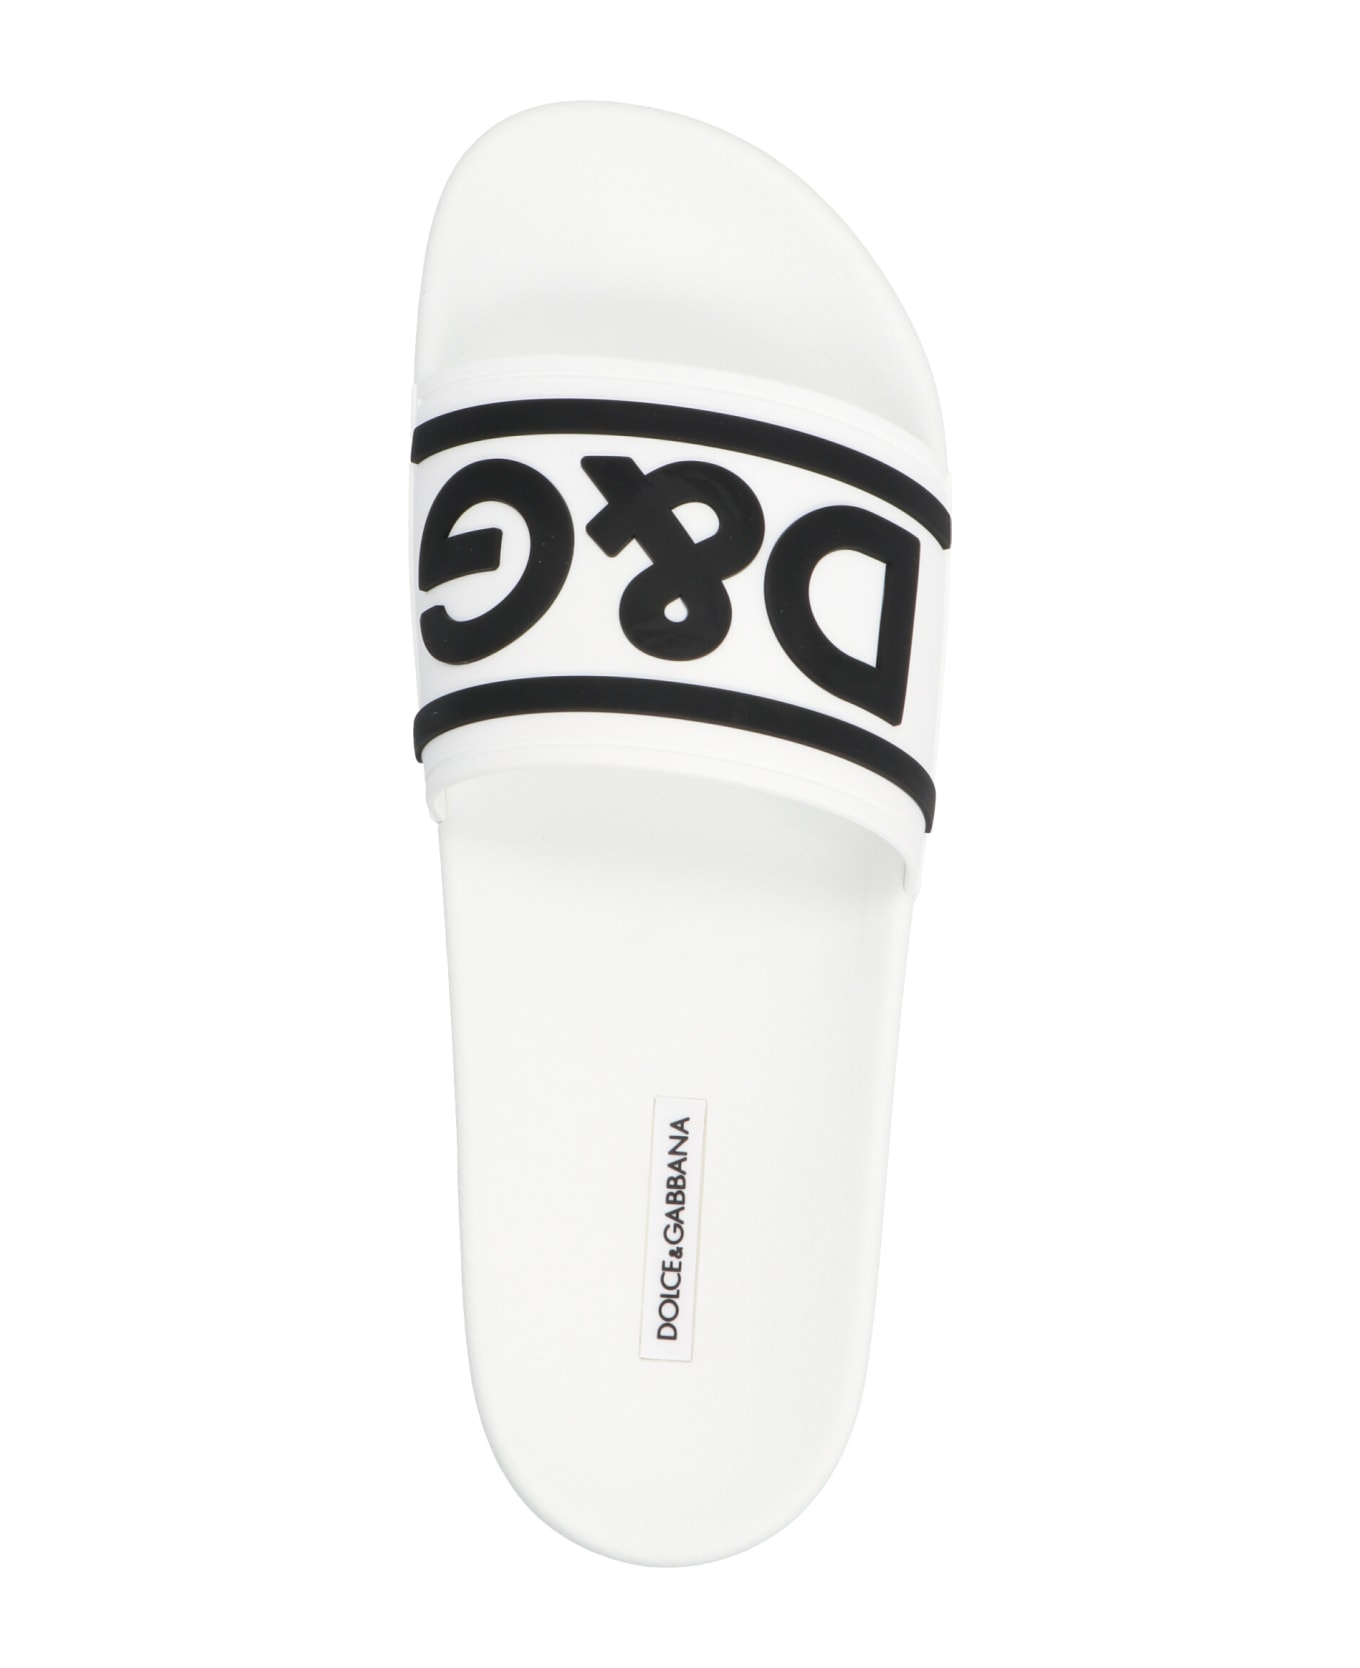 Dolce & Gabbana Logo Slides - White/Black